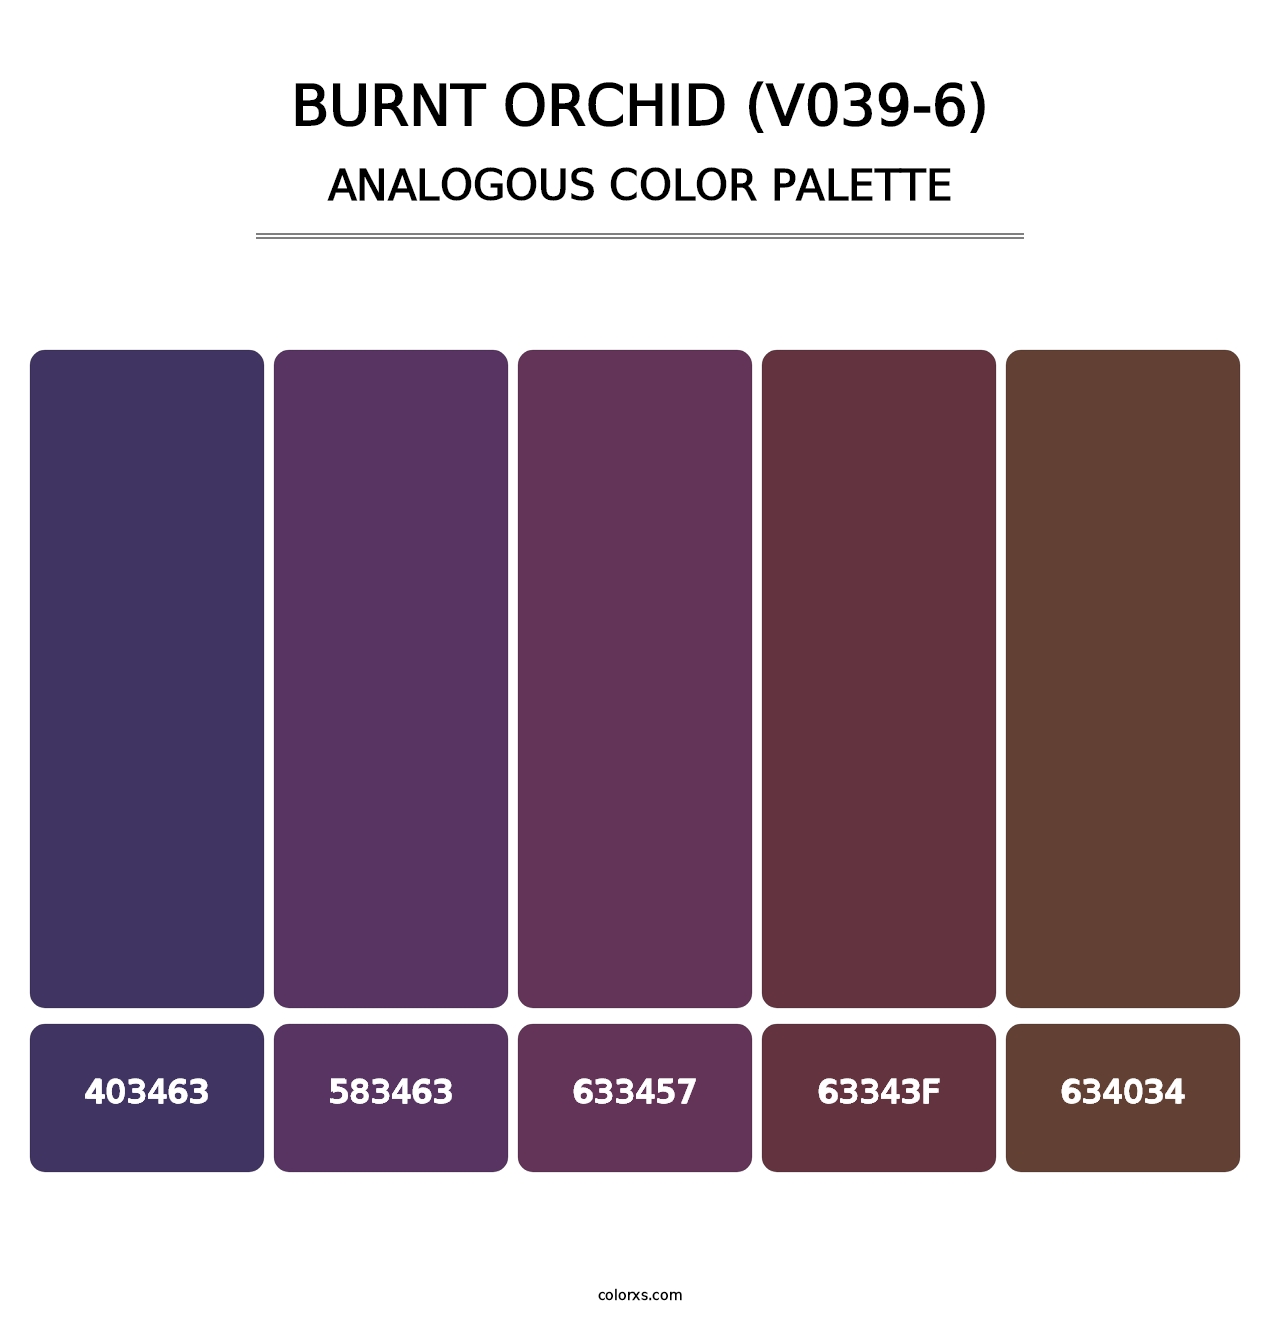 Burnt Orchid (V039-6) - Analogous Color Palette